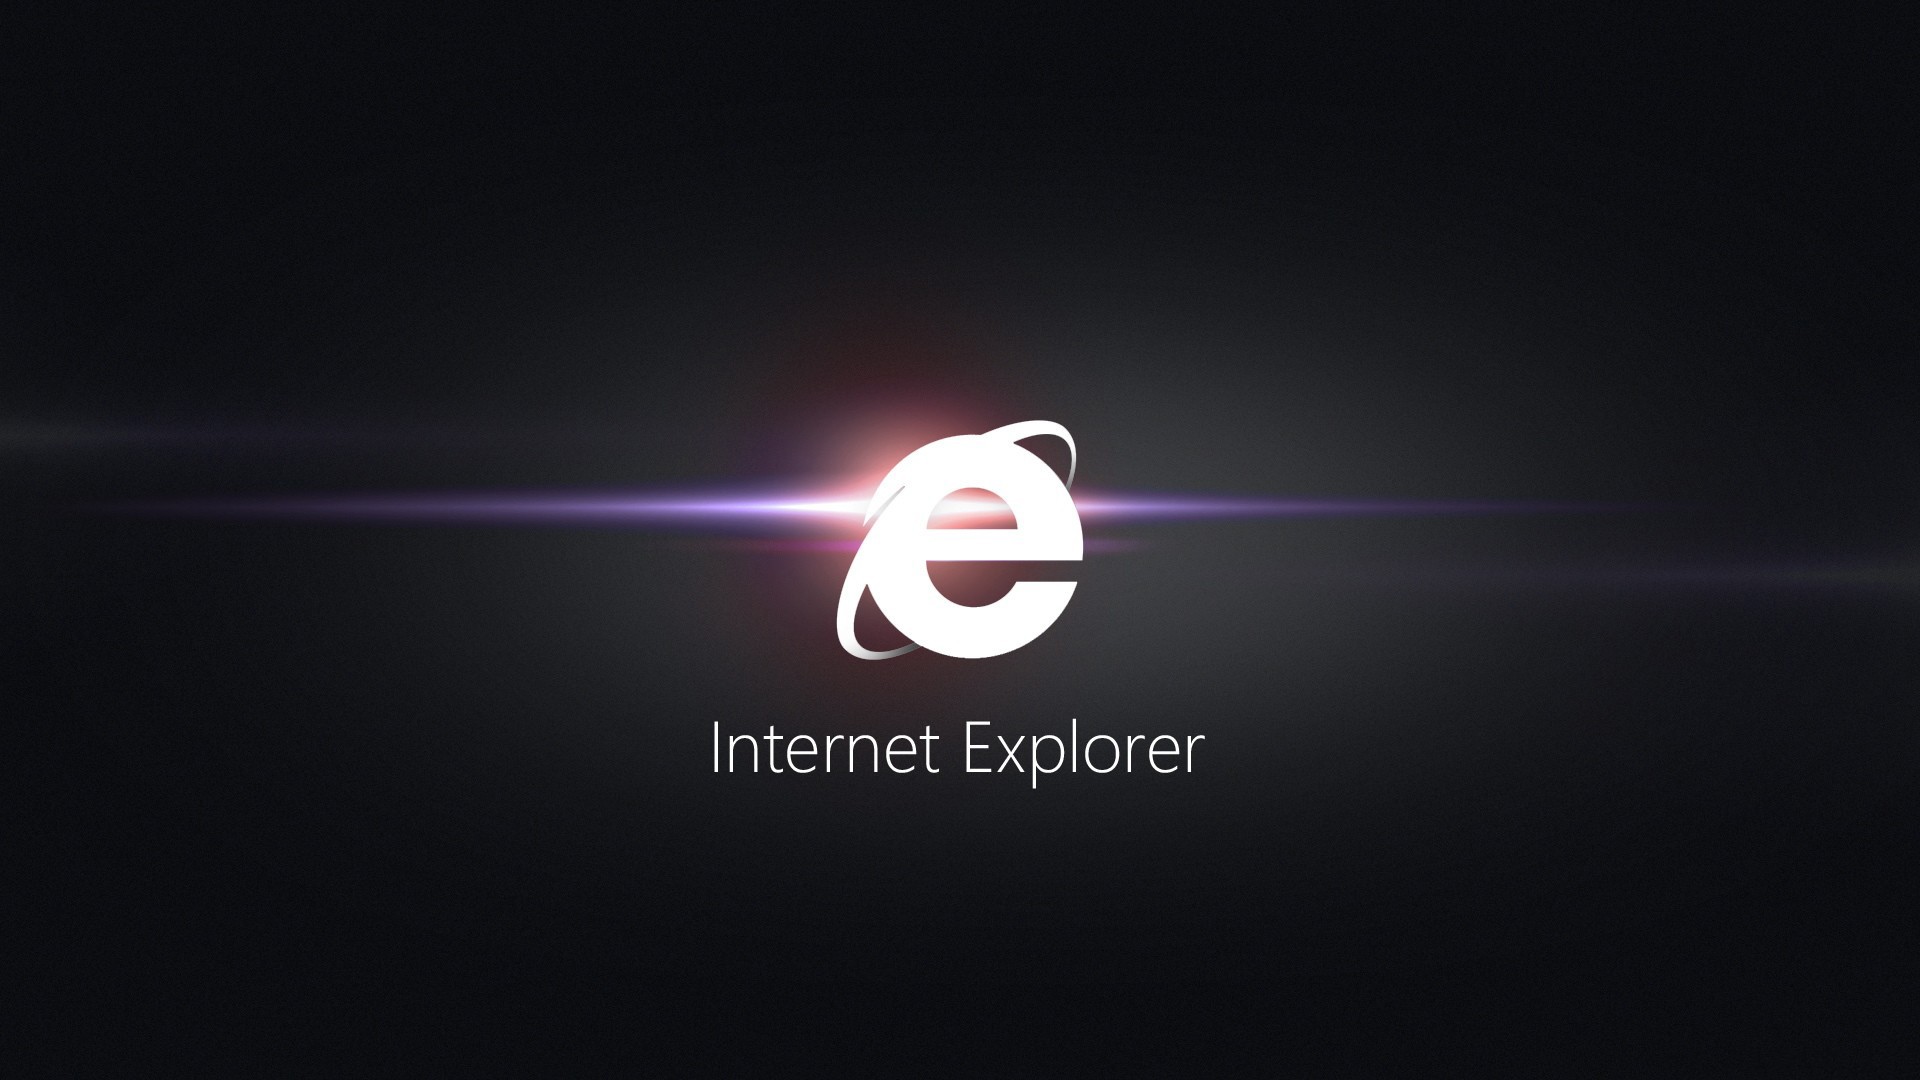 Inter Explorer Image Best HD Wallpaper Puter